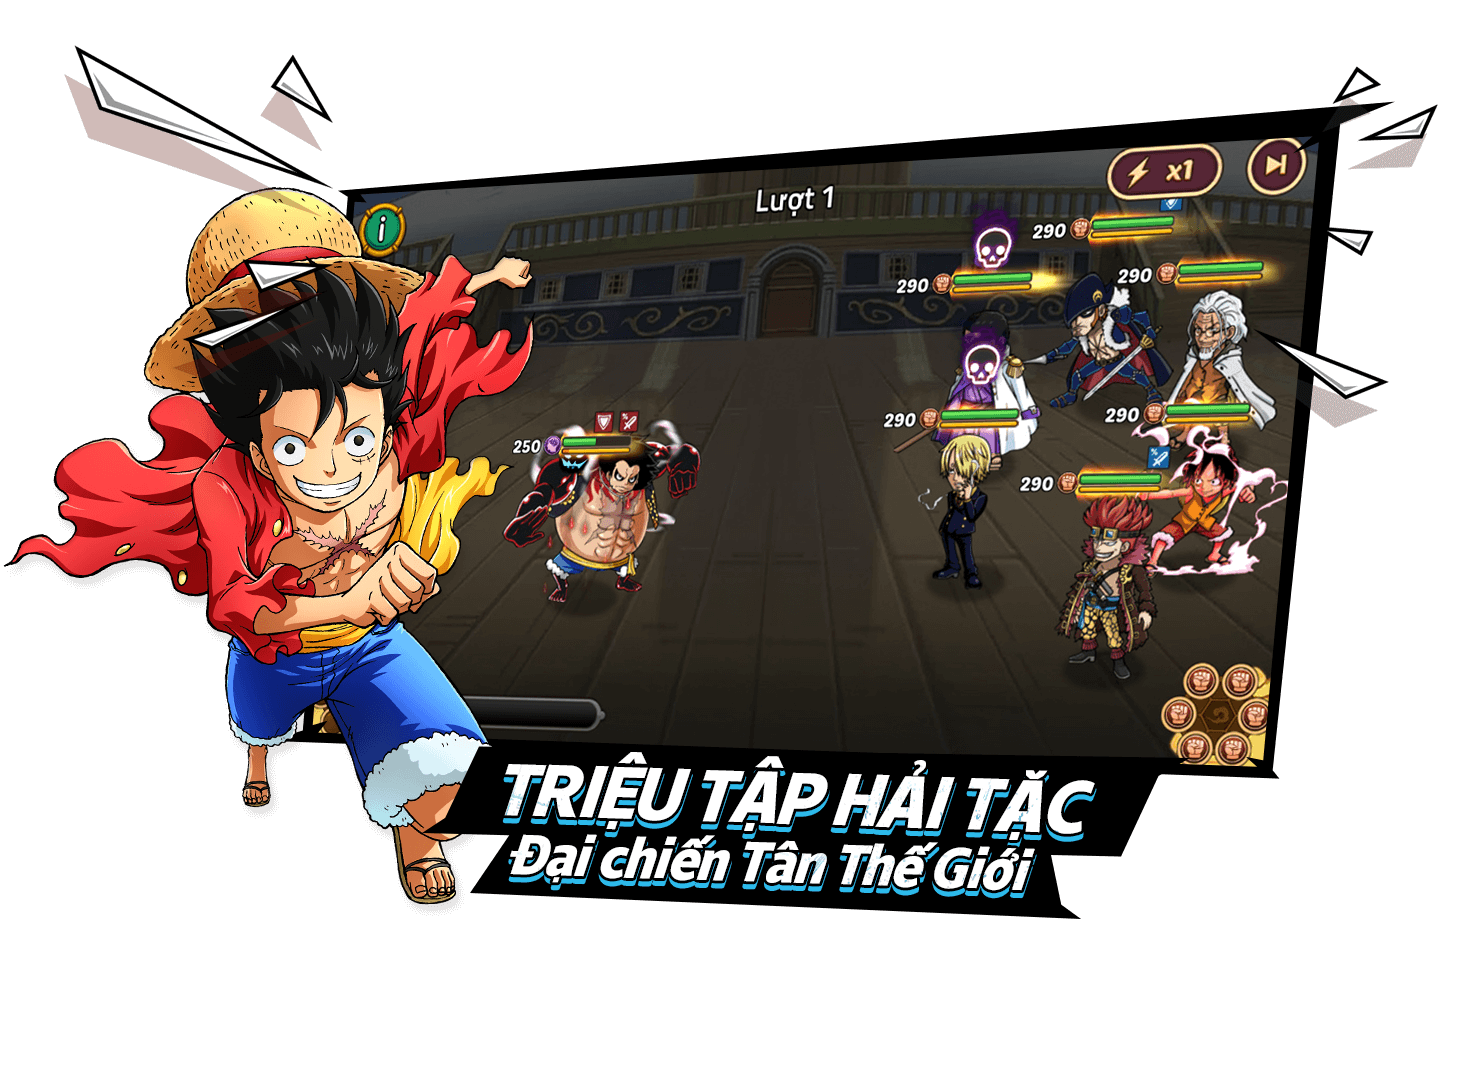 Huyền Thoại Hải Tặc - Game Onepiece Top 1 Việt Nam